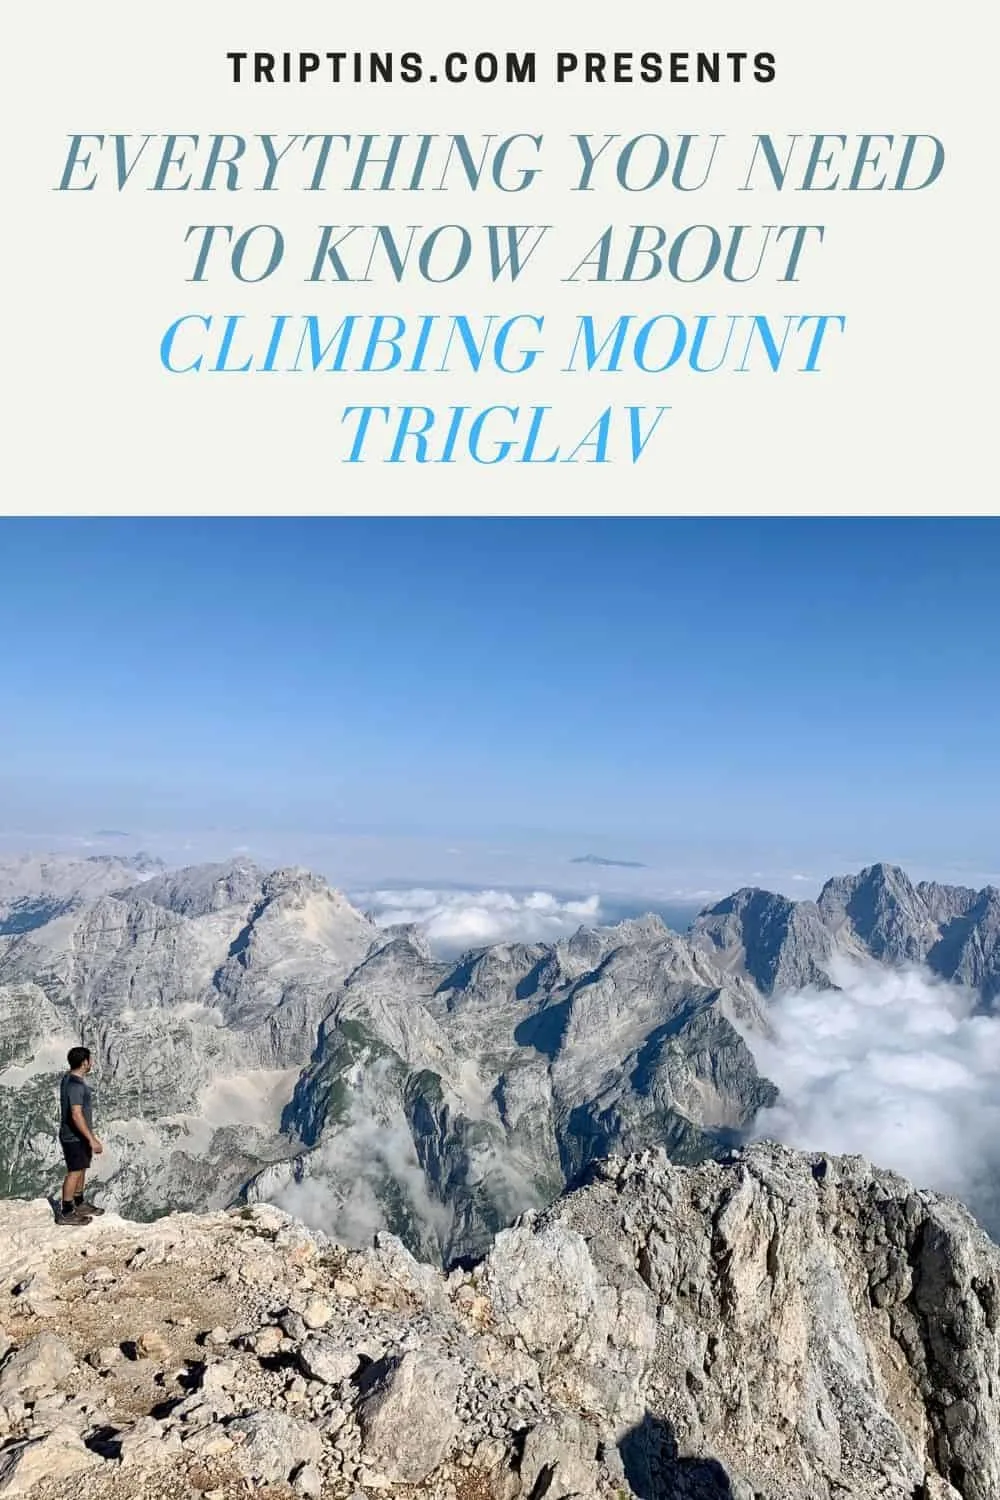 Mount Triglav TripTins